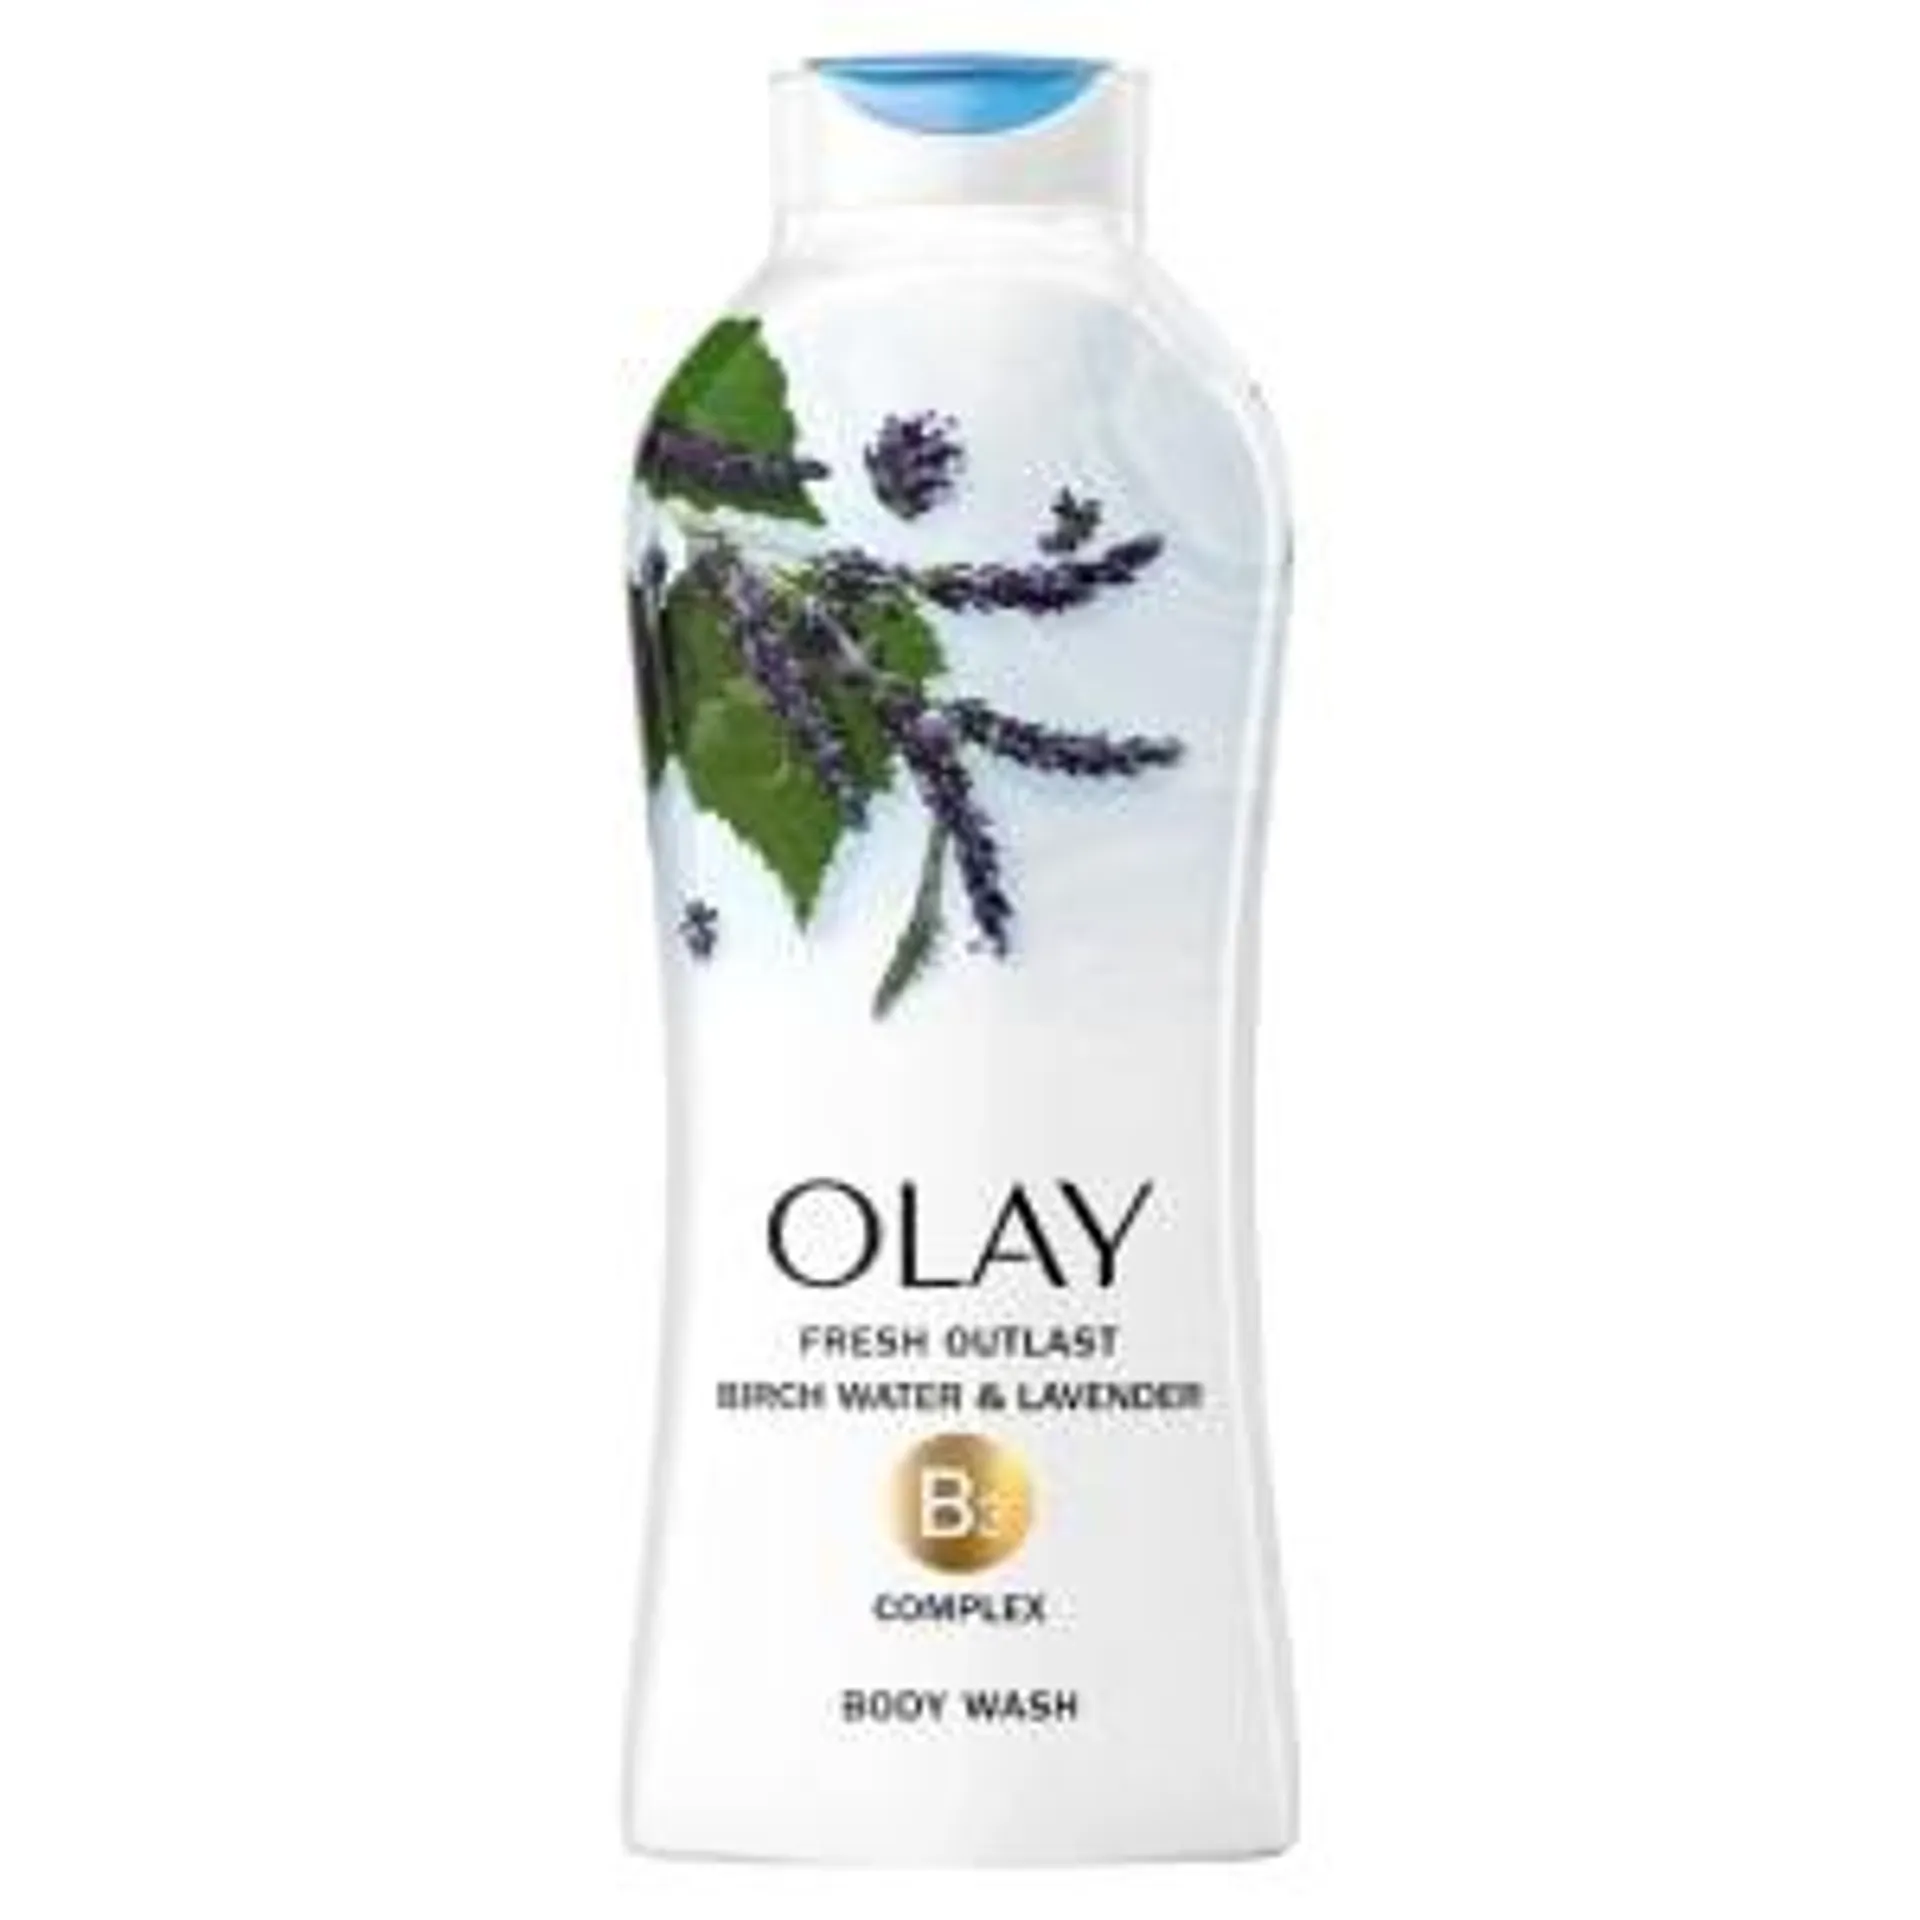 Olay Fresh Outlast Birch Water and Lavender Body Wash, 22 oz.